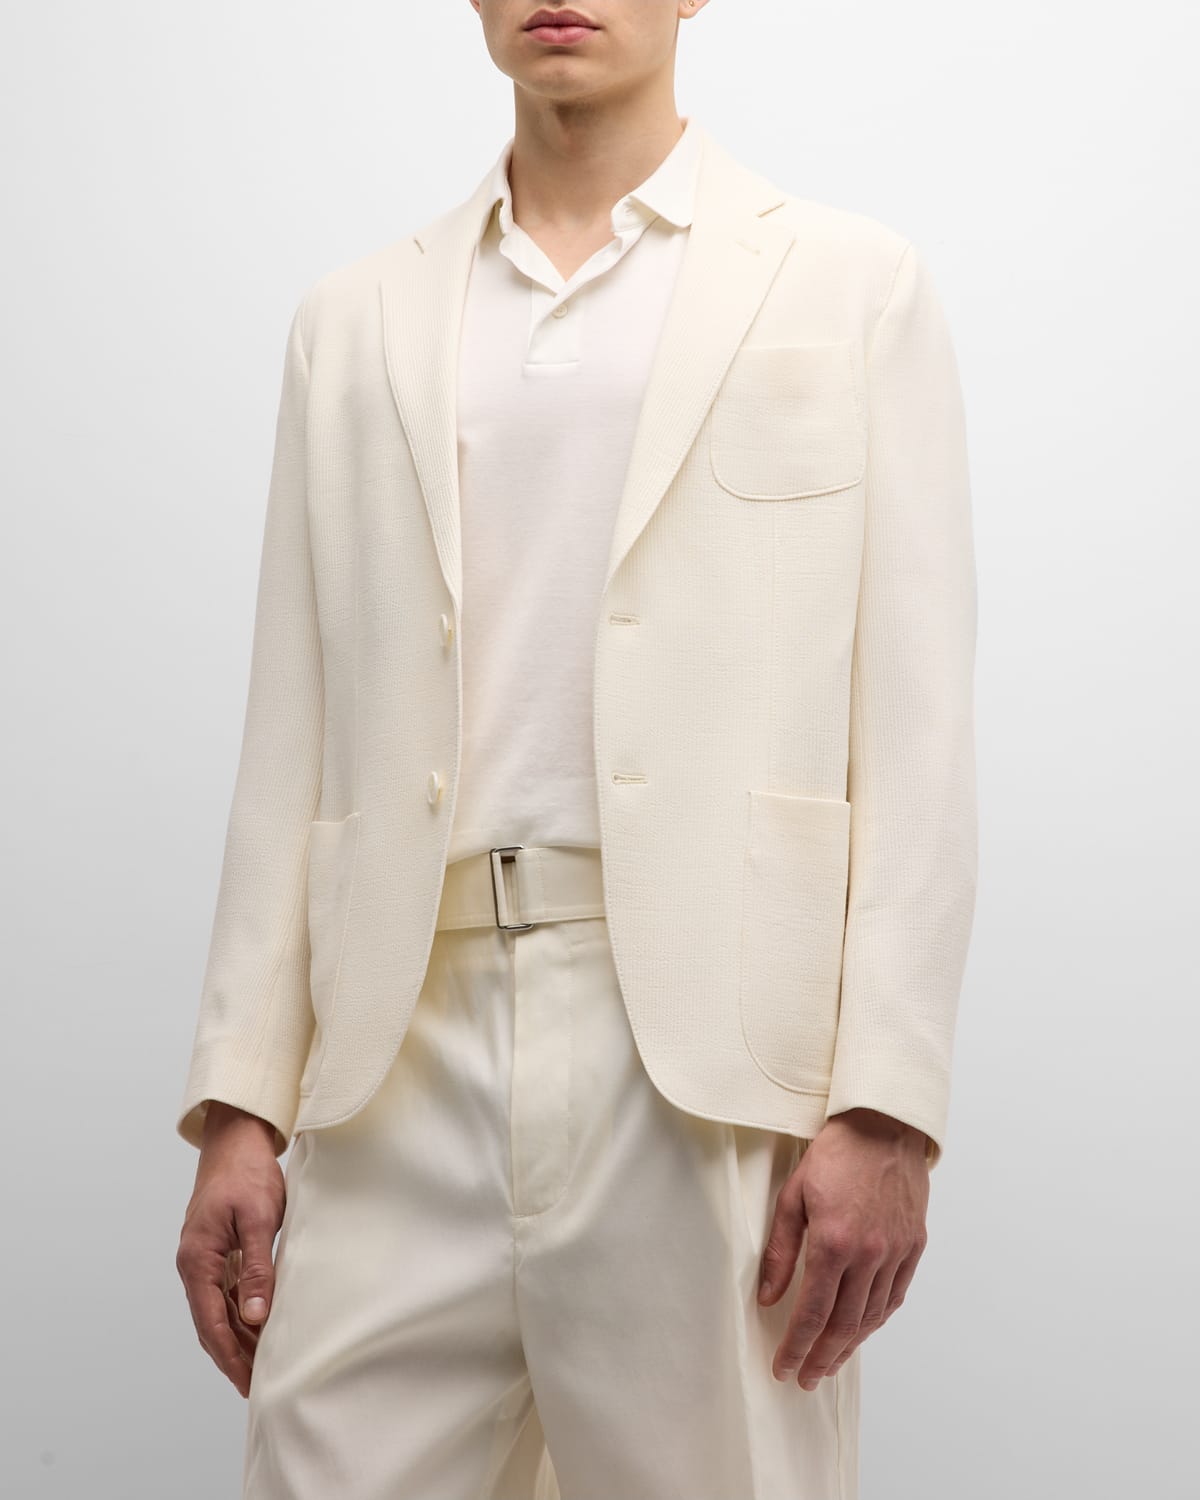 Shop Giorgio Armani Men's Seersucker Suit Separate Jacket In Solid White